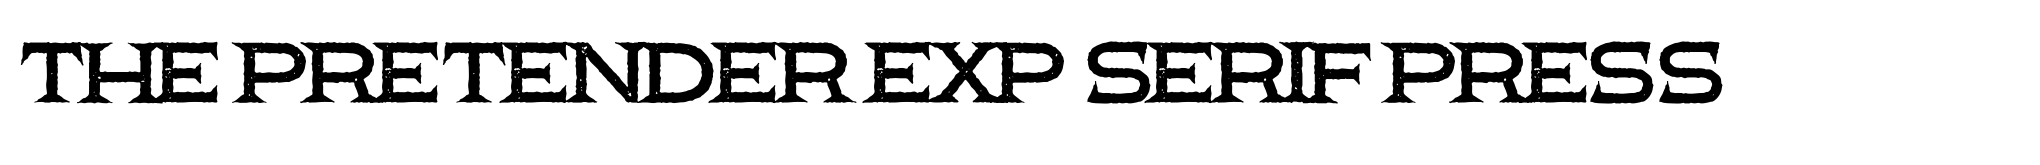 The Pretender Exp Serif Press image